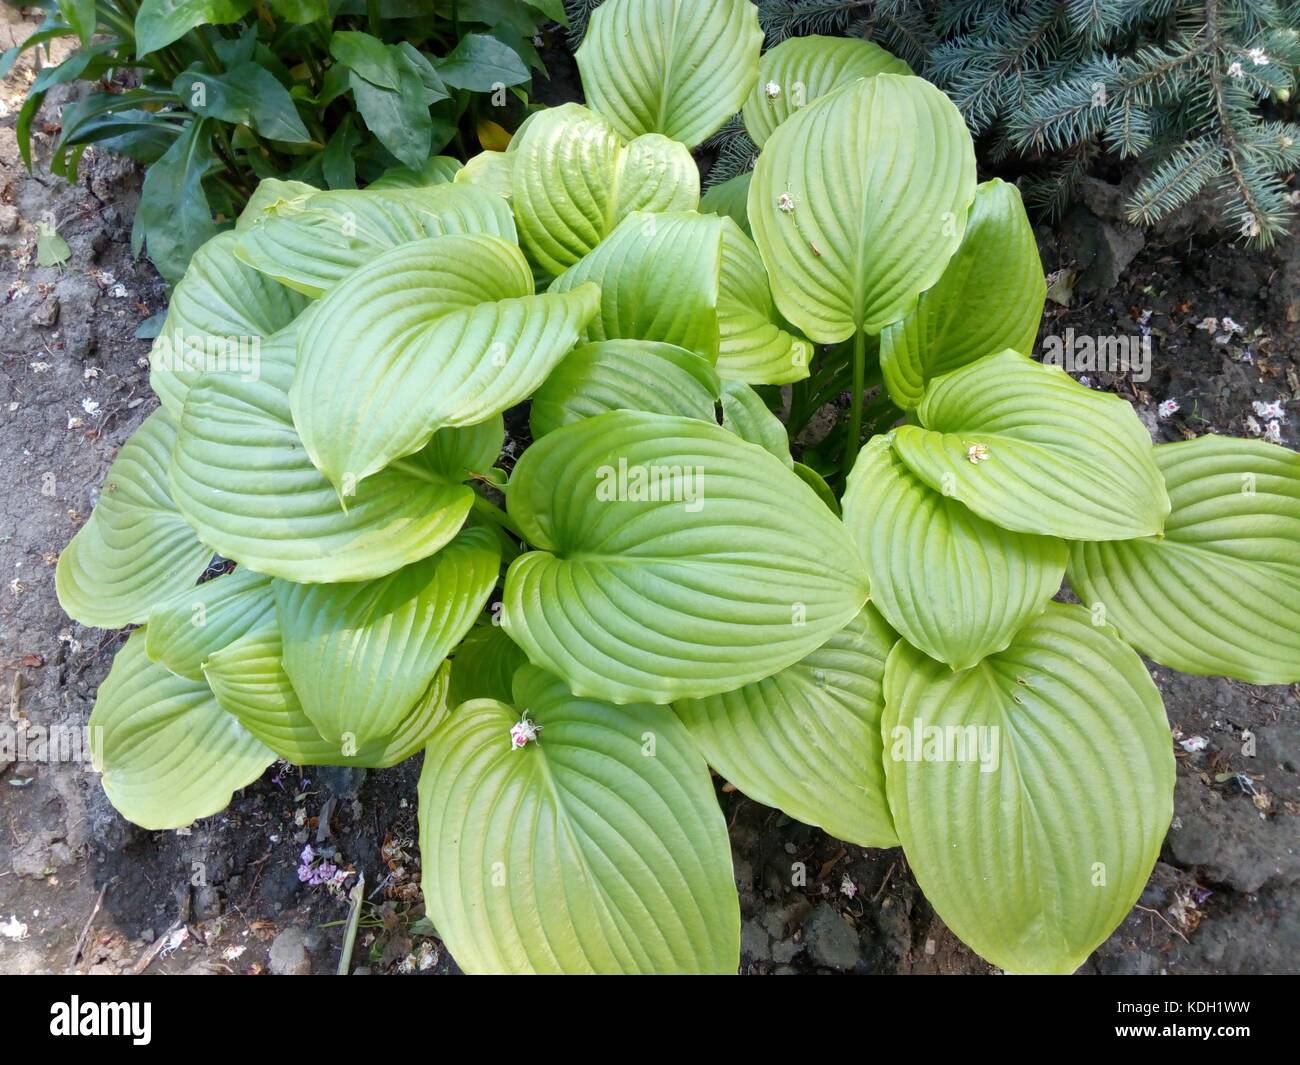 Bush plants with large green shiny leaves closeup Stock Photo - Alamy